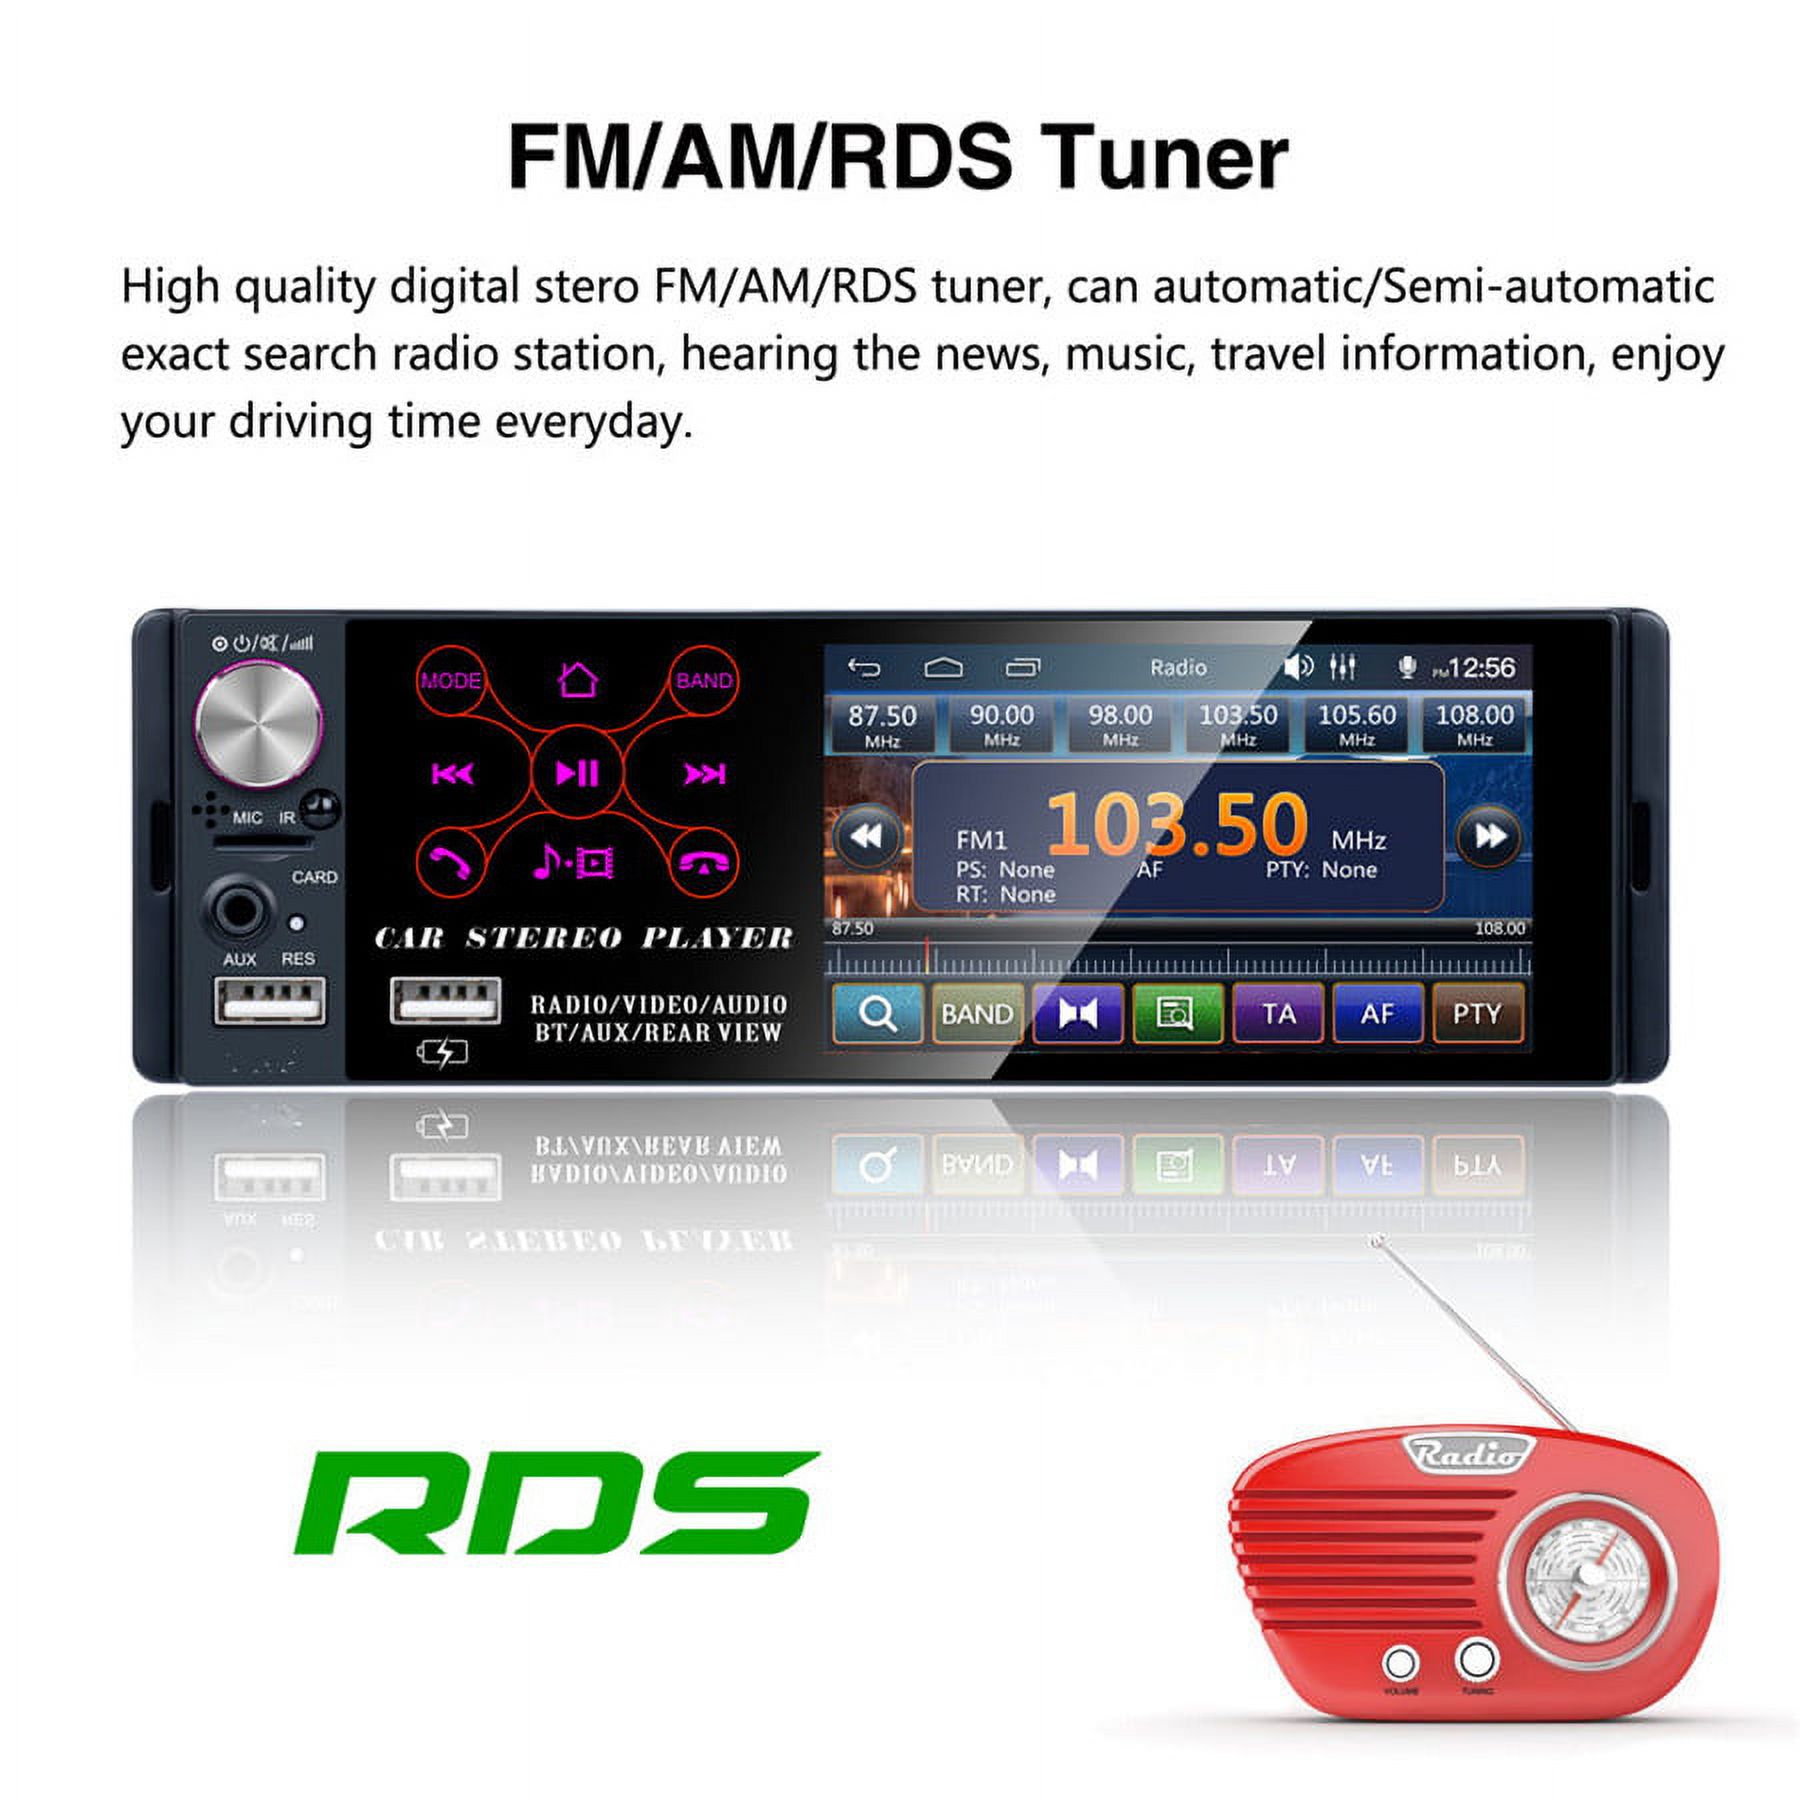 Car 4.1" 7 Color Back Light RMVB/Radio/AM/FM/RDS/AUX Radio Bluetooth MP5 Player - image 2 of 5